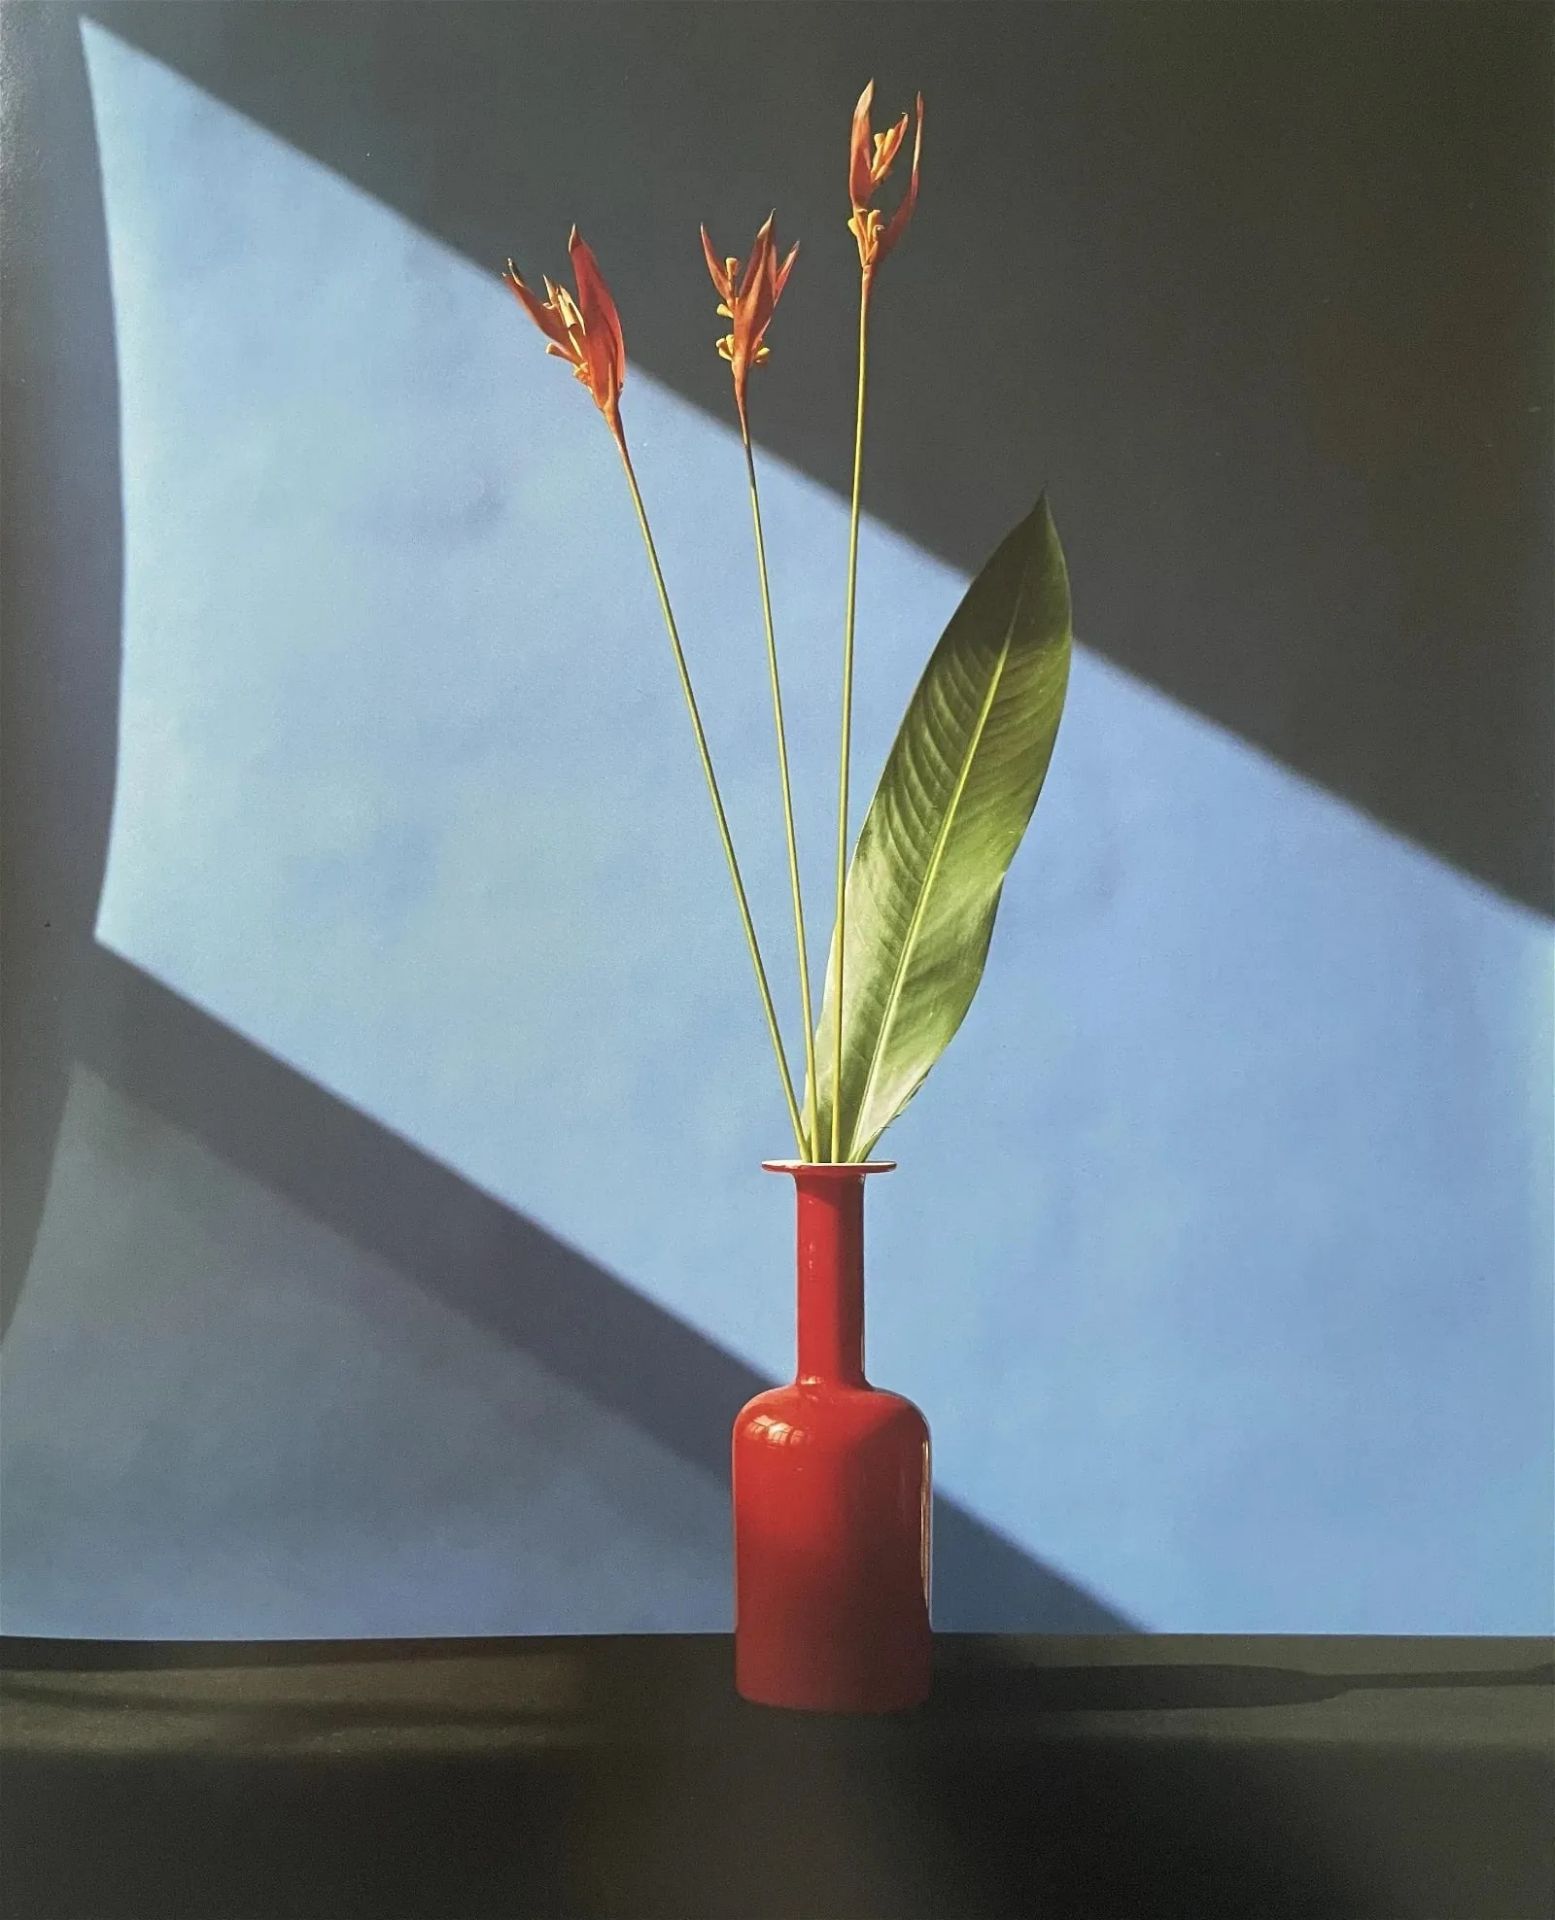 Robert Mapplethorpe "Flowers, 1982" Print